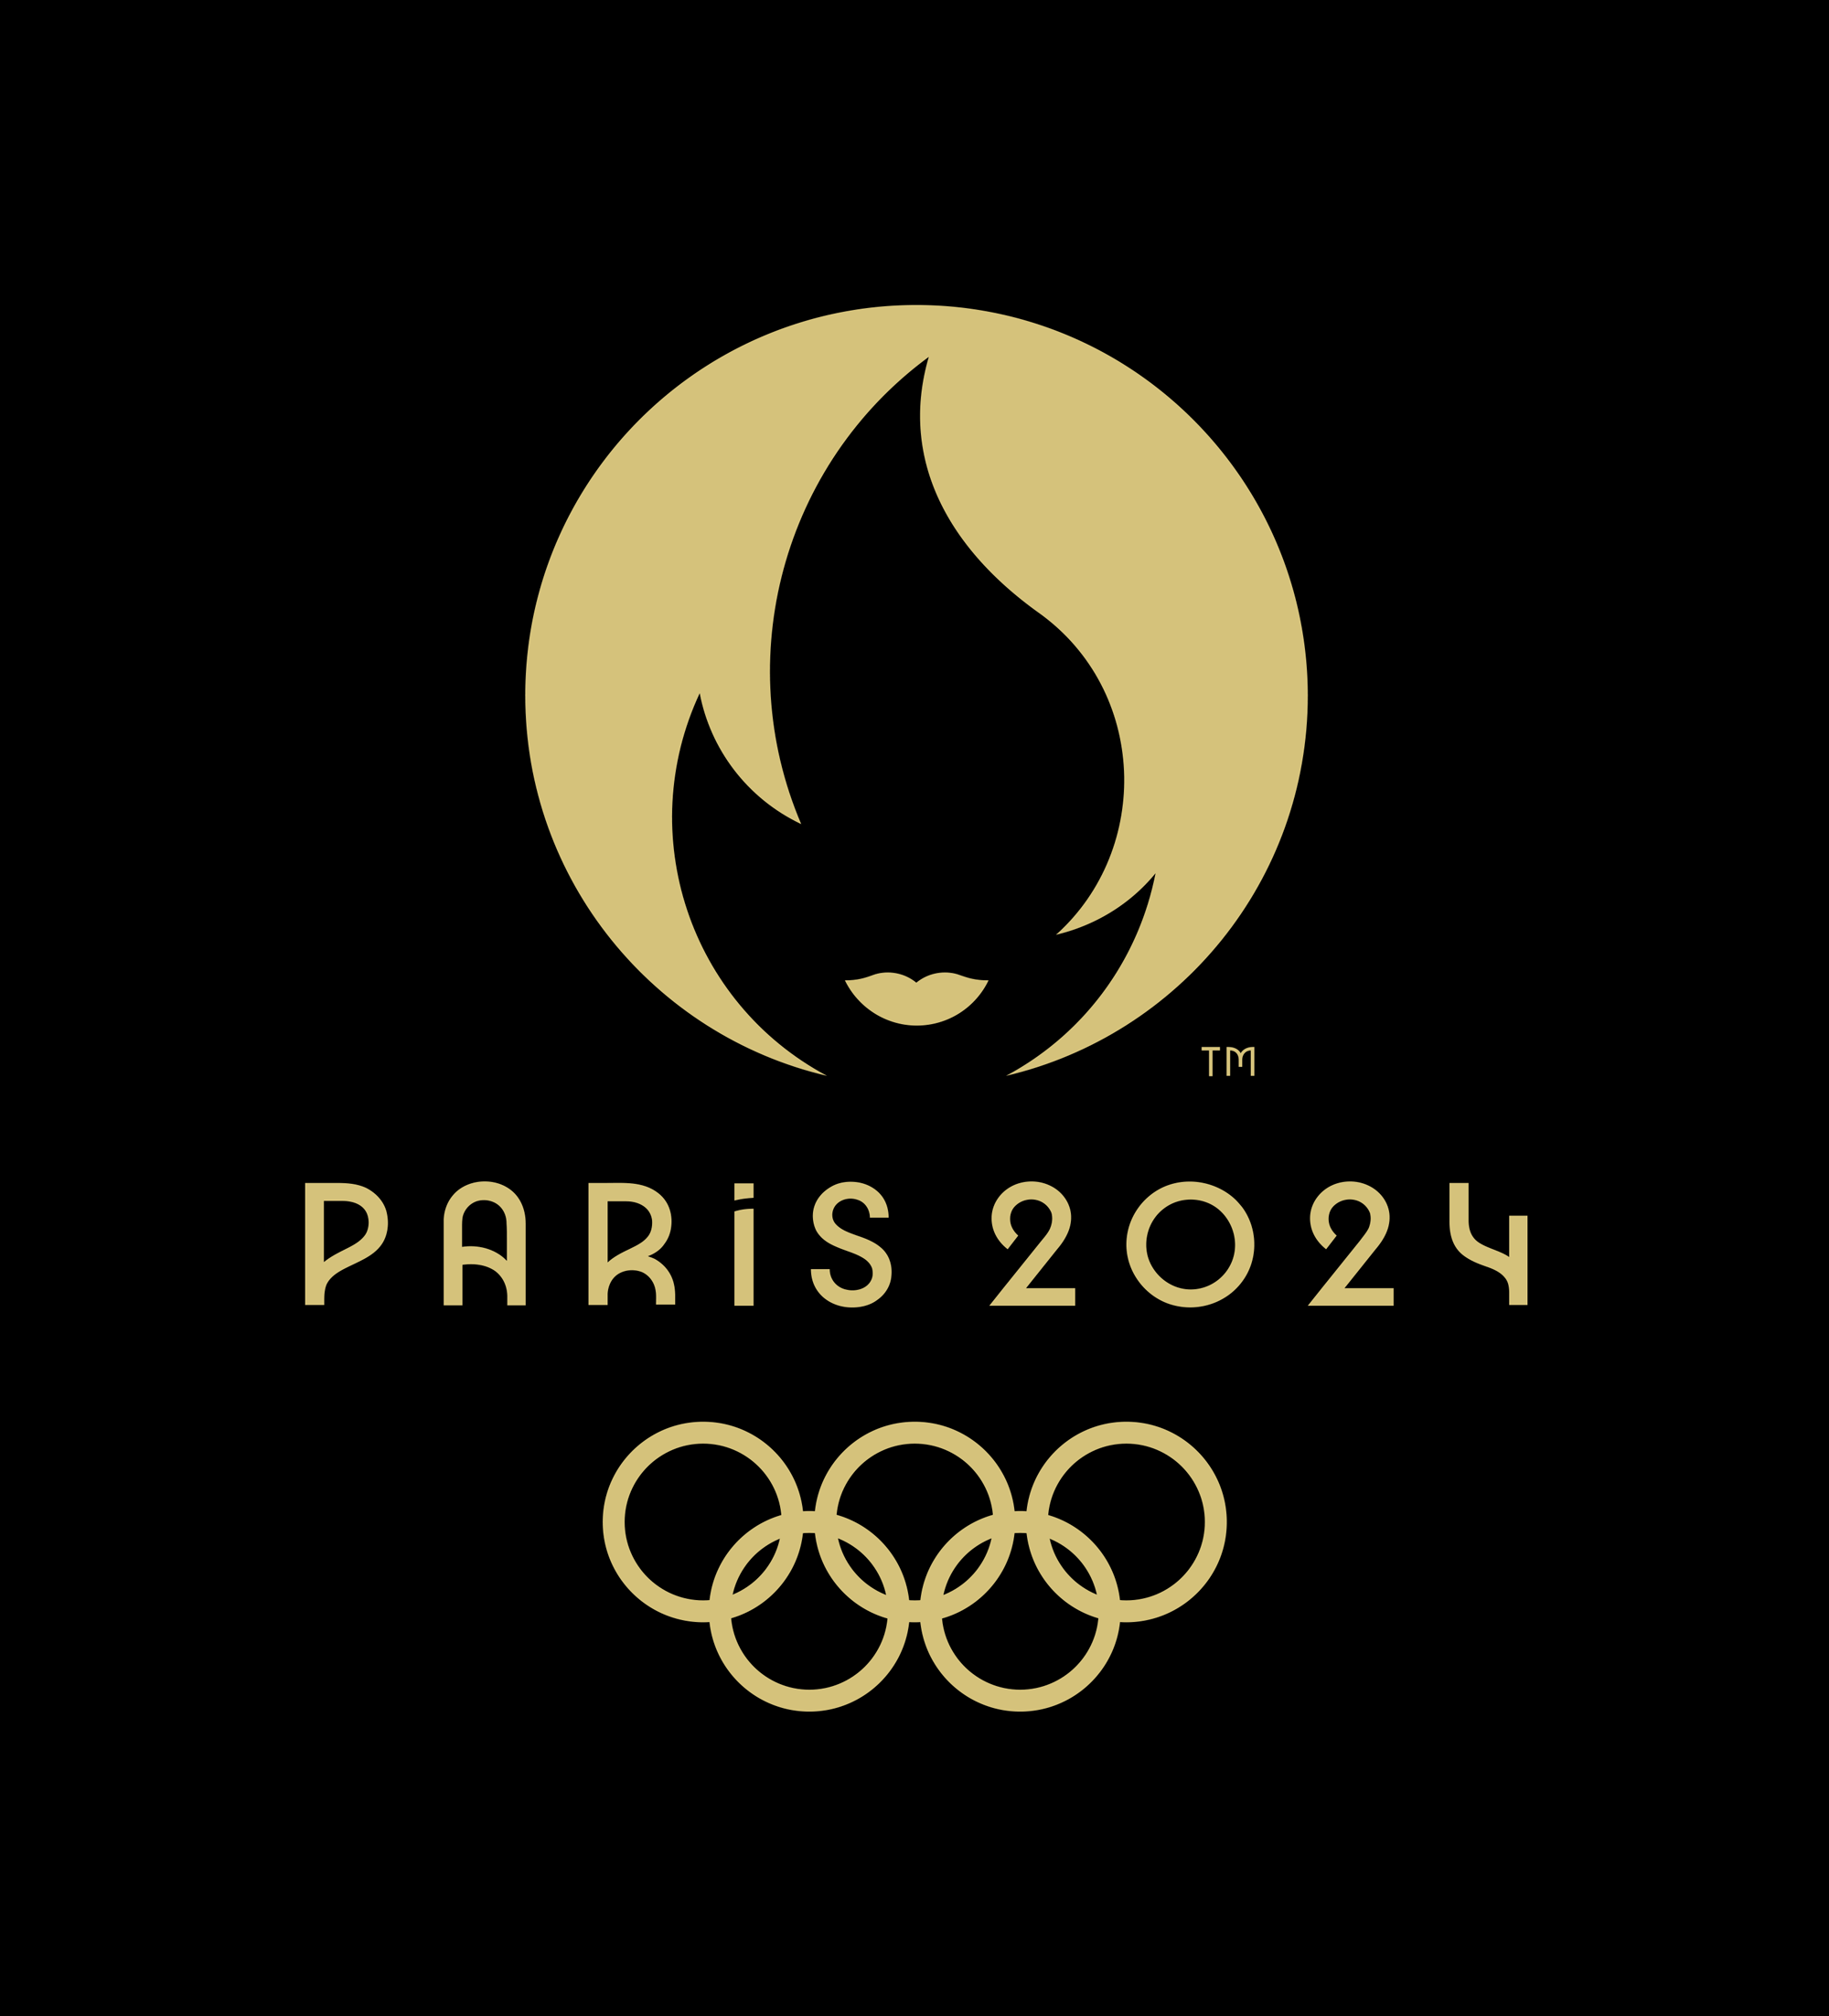 Paris2024 Official Logo 